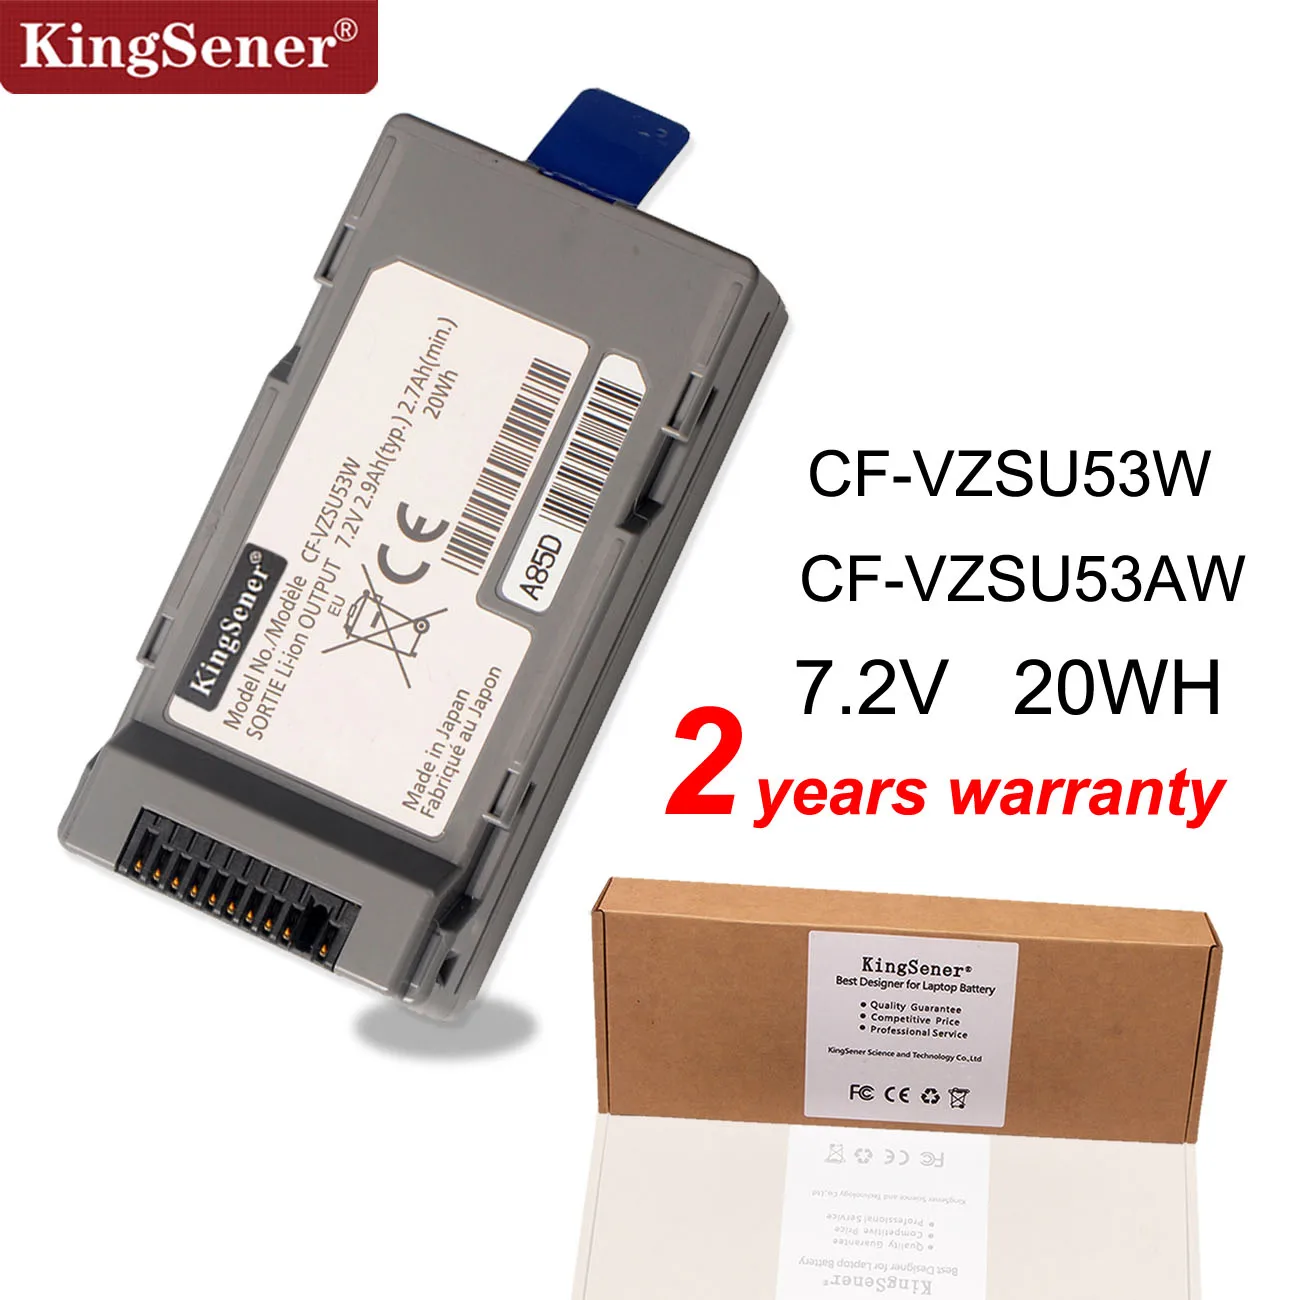 

KingSener CF-VZSU53W Battery For Panasonic Toughbook CF-H1 CF-H2 CF-U1 Tablet PC CF-VZSU53AW CF-VZSU53 7.2V 2.9Ah 20WH